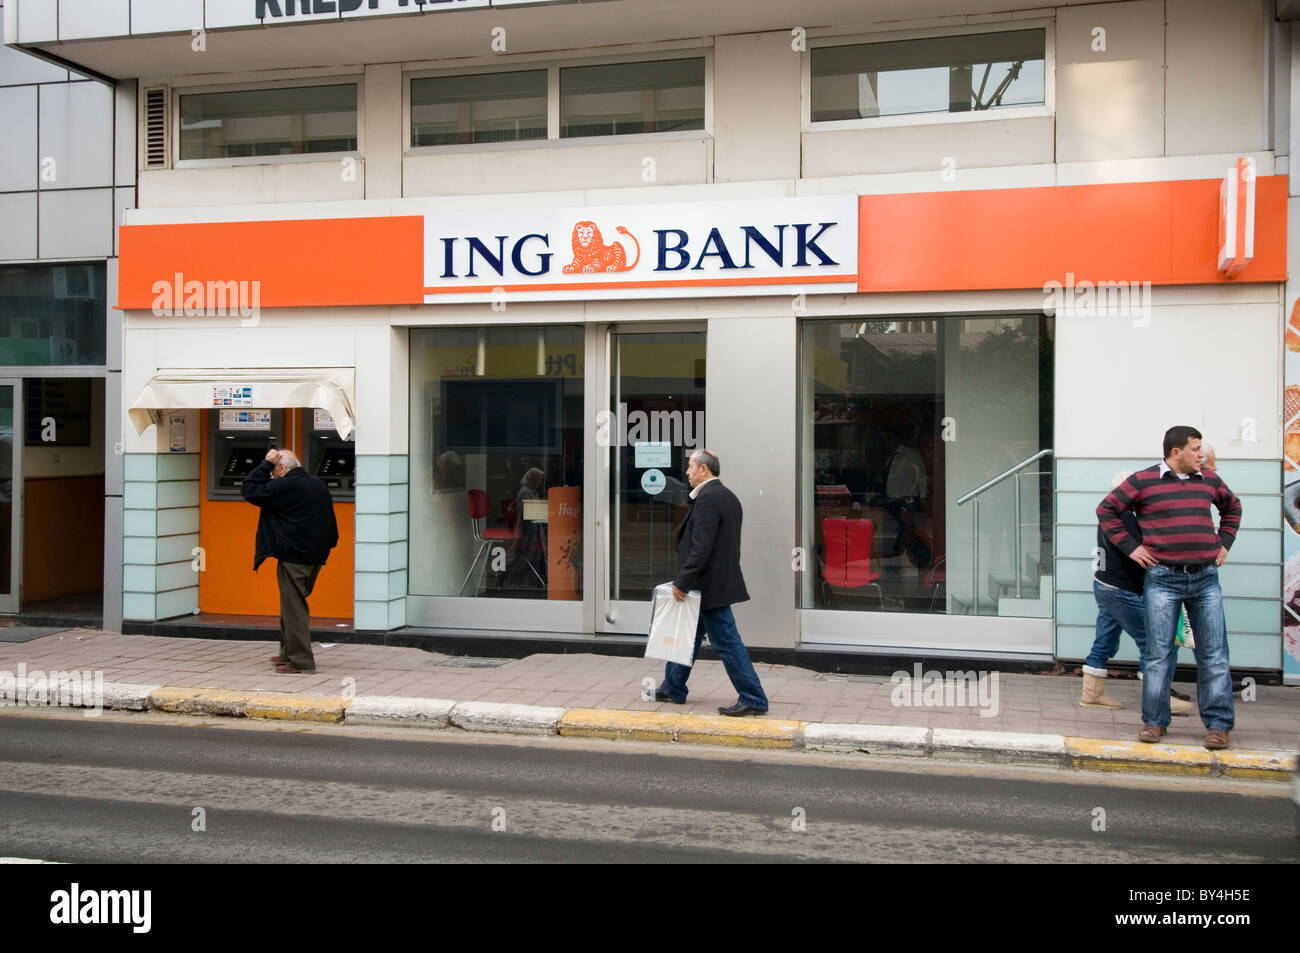 ing bank high street banks banking Internationale Nederlanden Groep dutch branch branches Stock Photo